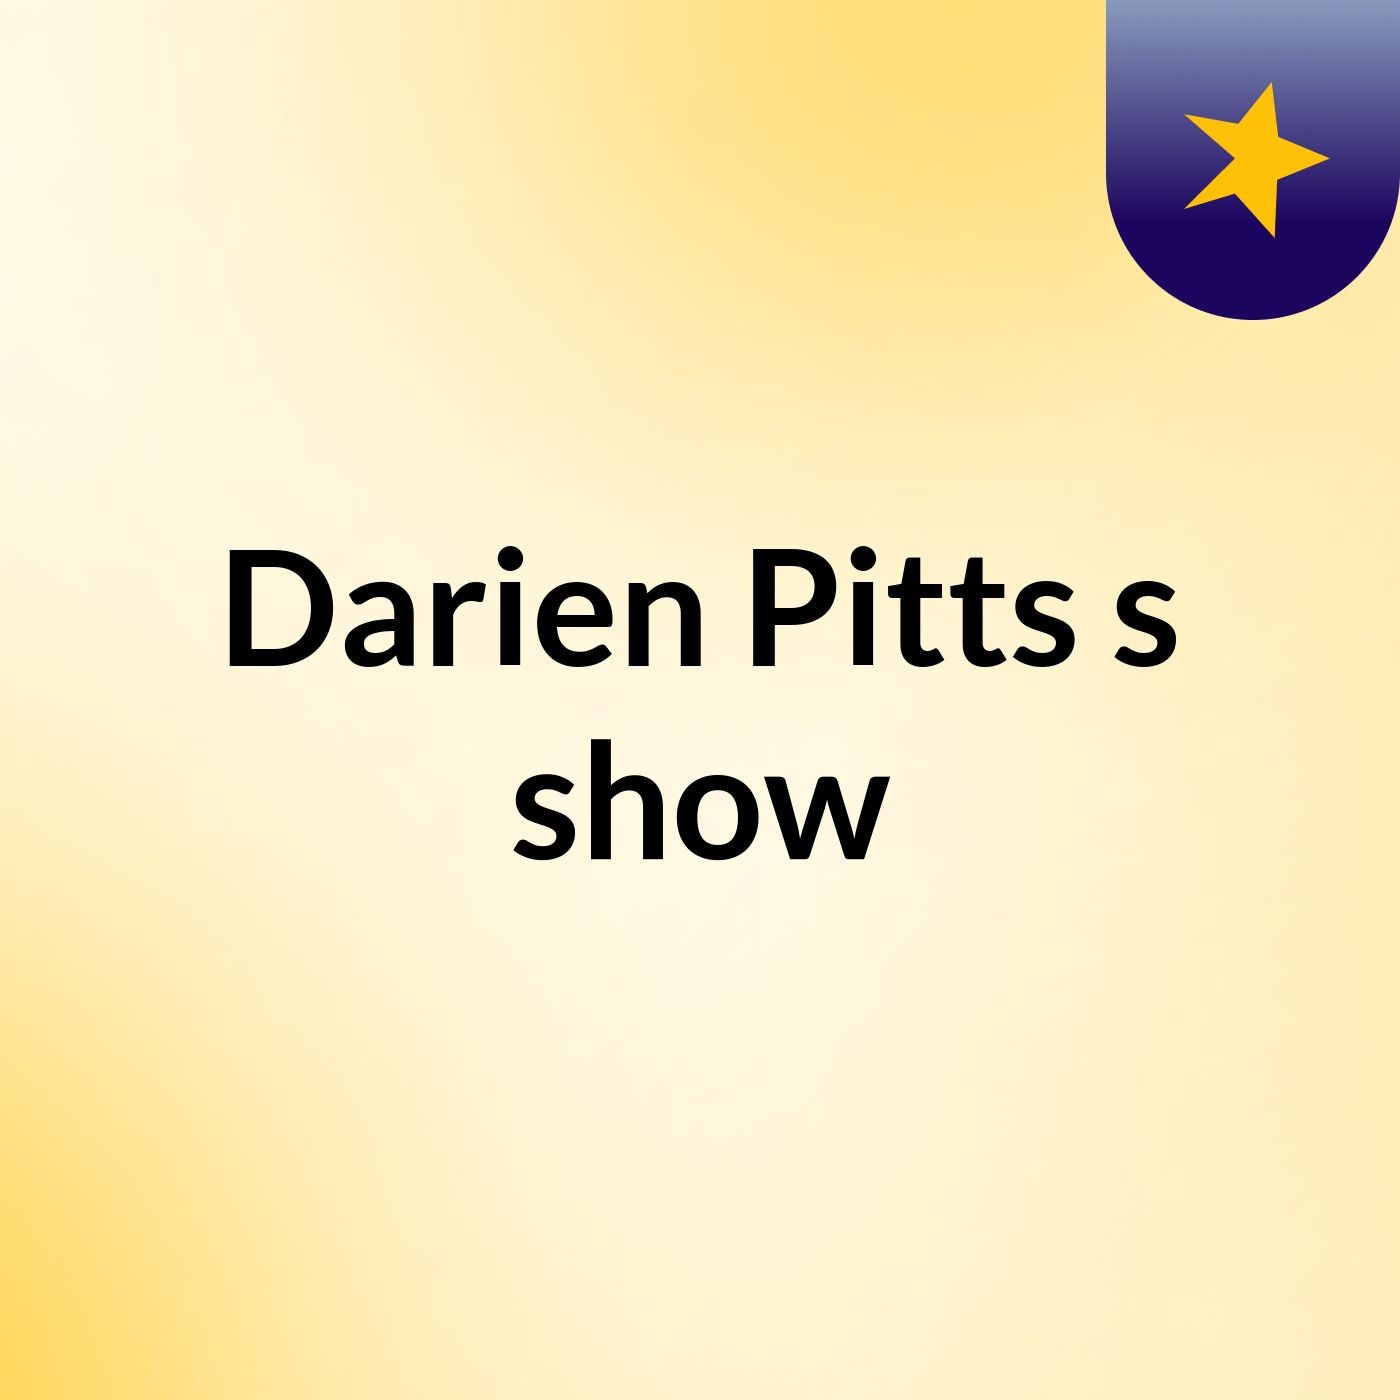 Darien Pitts's show